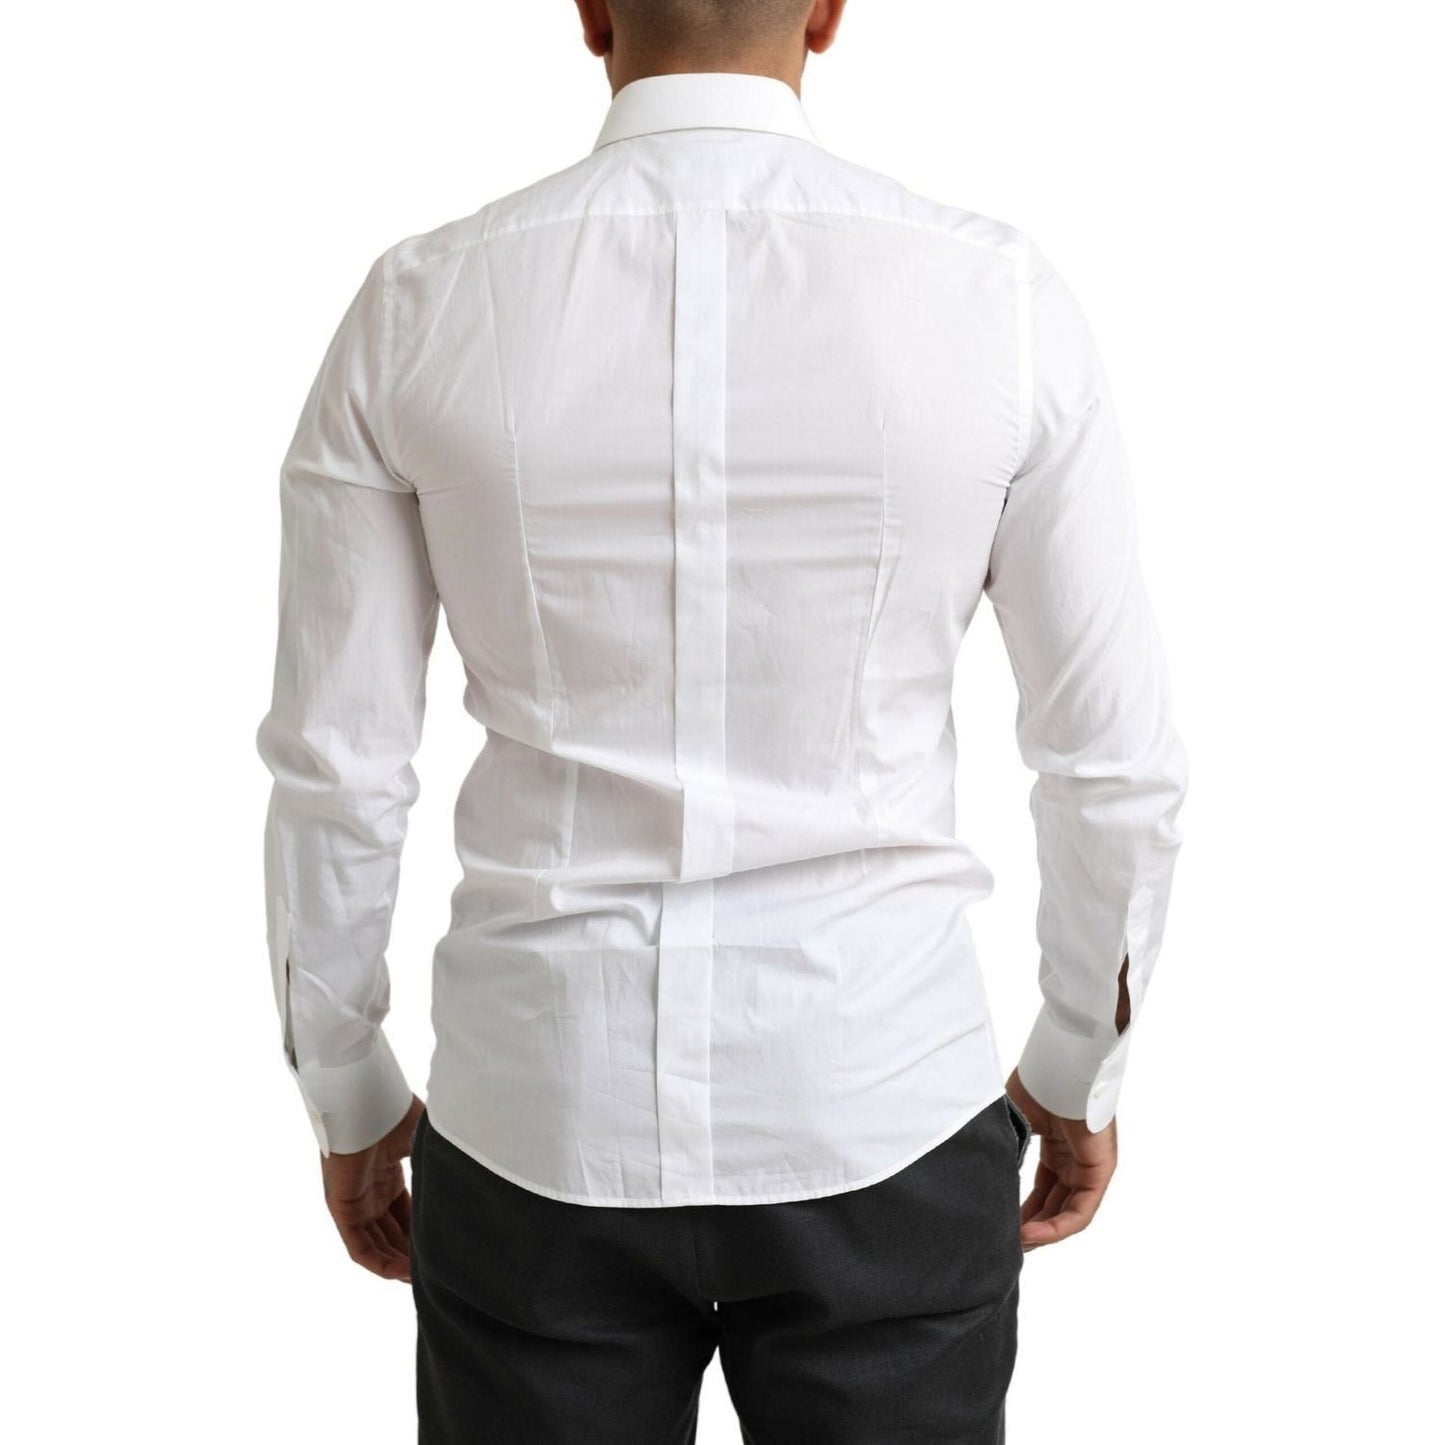 Dolce & Gabbana Italian Designer Slim Fit Tuxedo Shirt white-tuxedo-slim-fit-baroque-shirt 465A9595-scaled-79329132-066.jpg